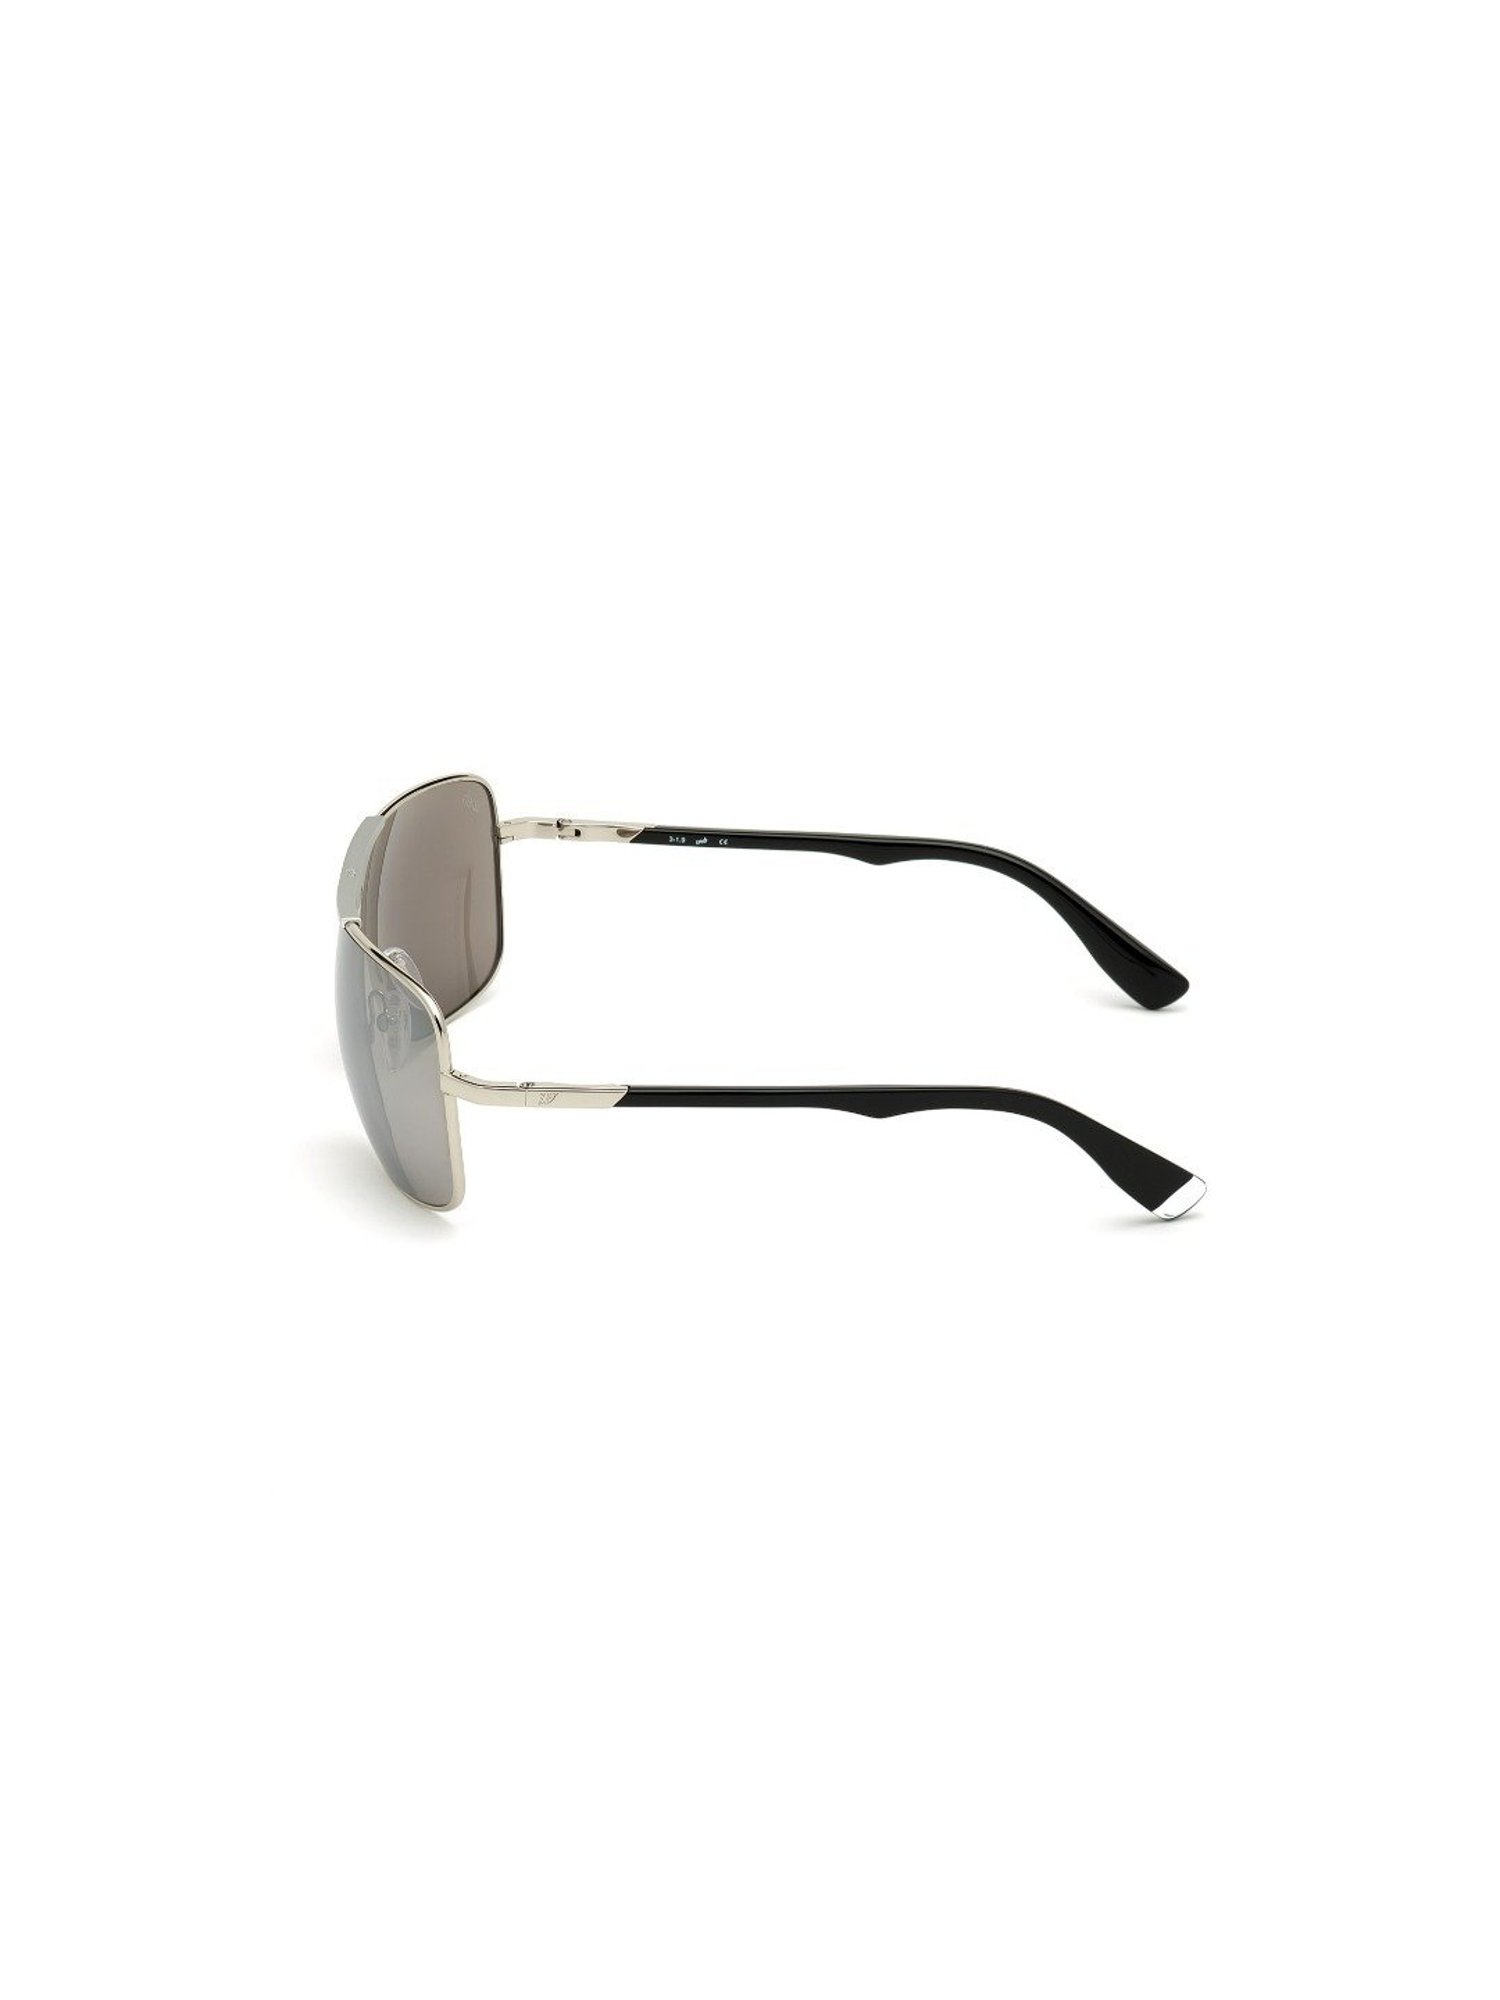 Buy Web Eyewear Grey Rectangular Unisex Sunglasses at Best Price @ Tata CLiQ